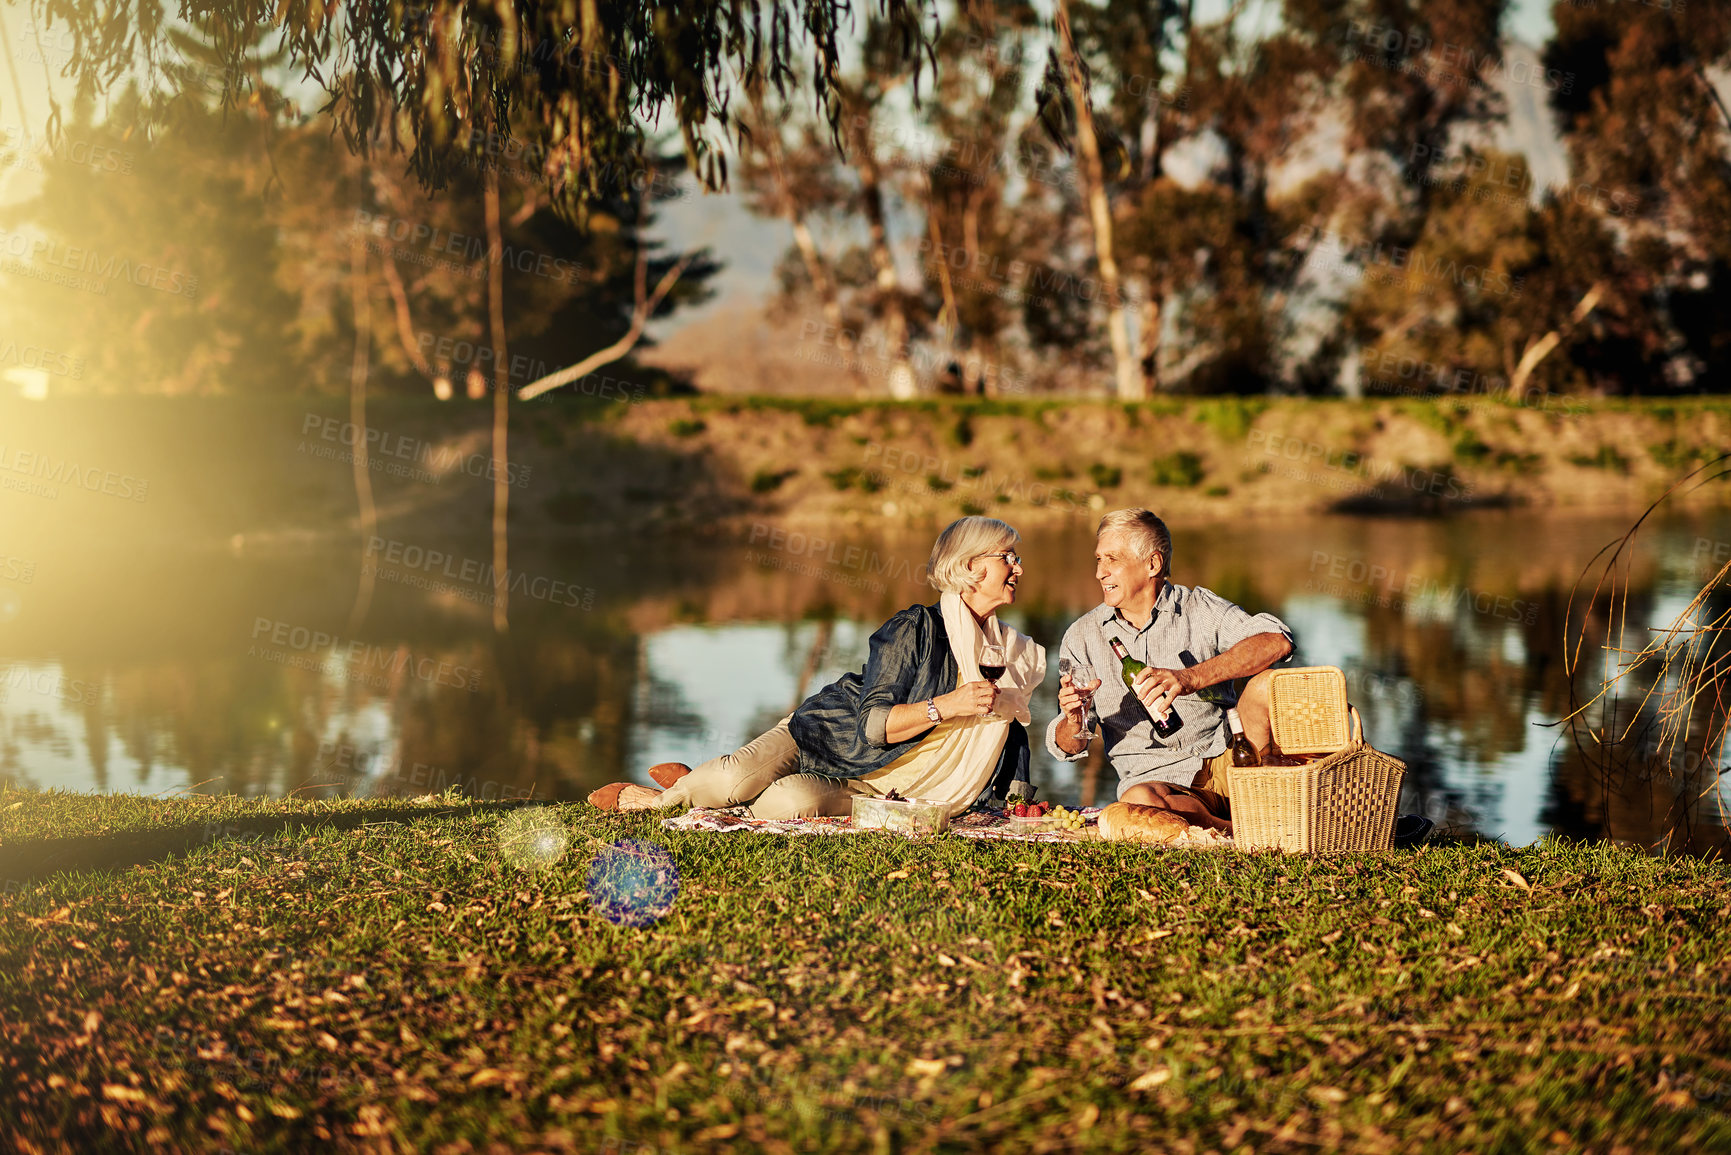 Buy stock photo Shot of a happy senior couple drinking wine while enjoying a picnic outside